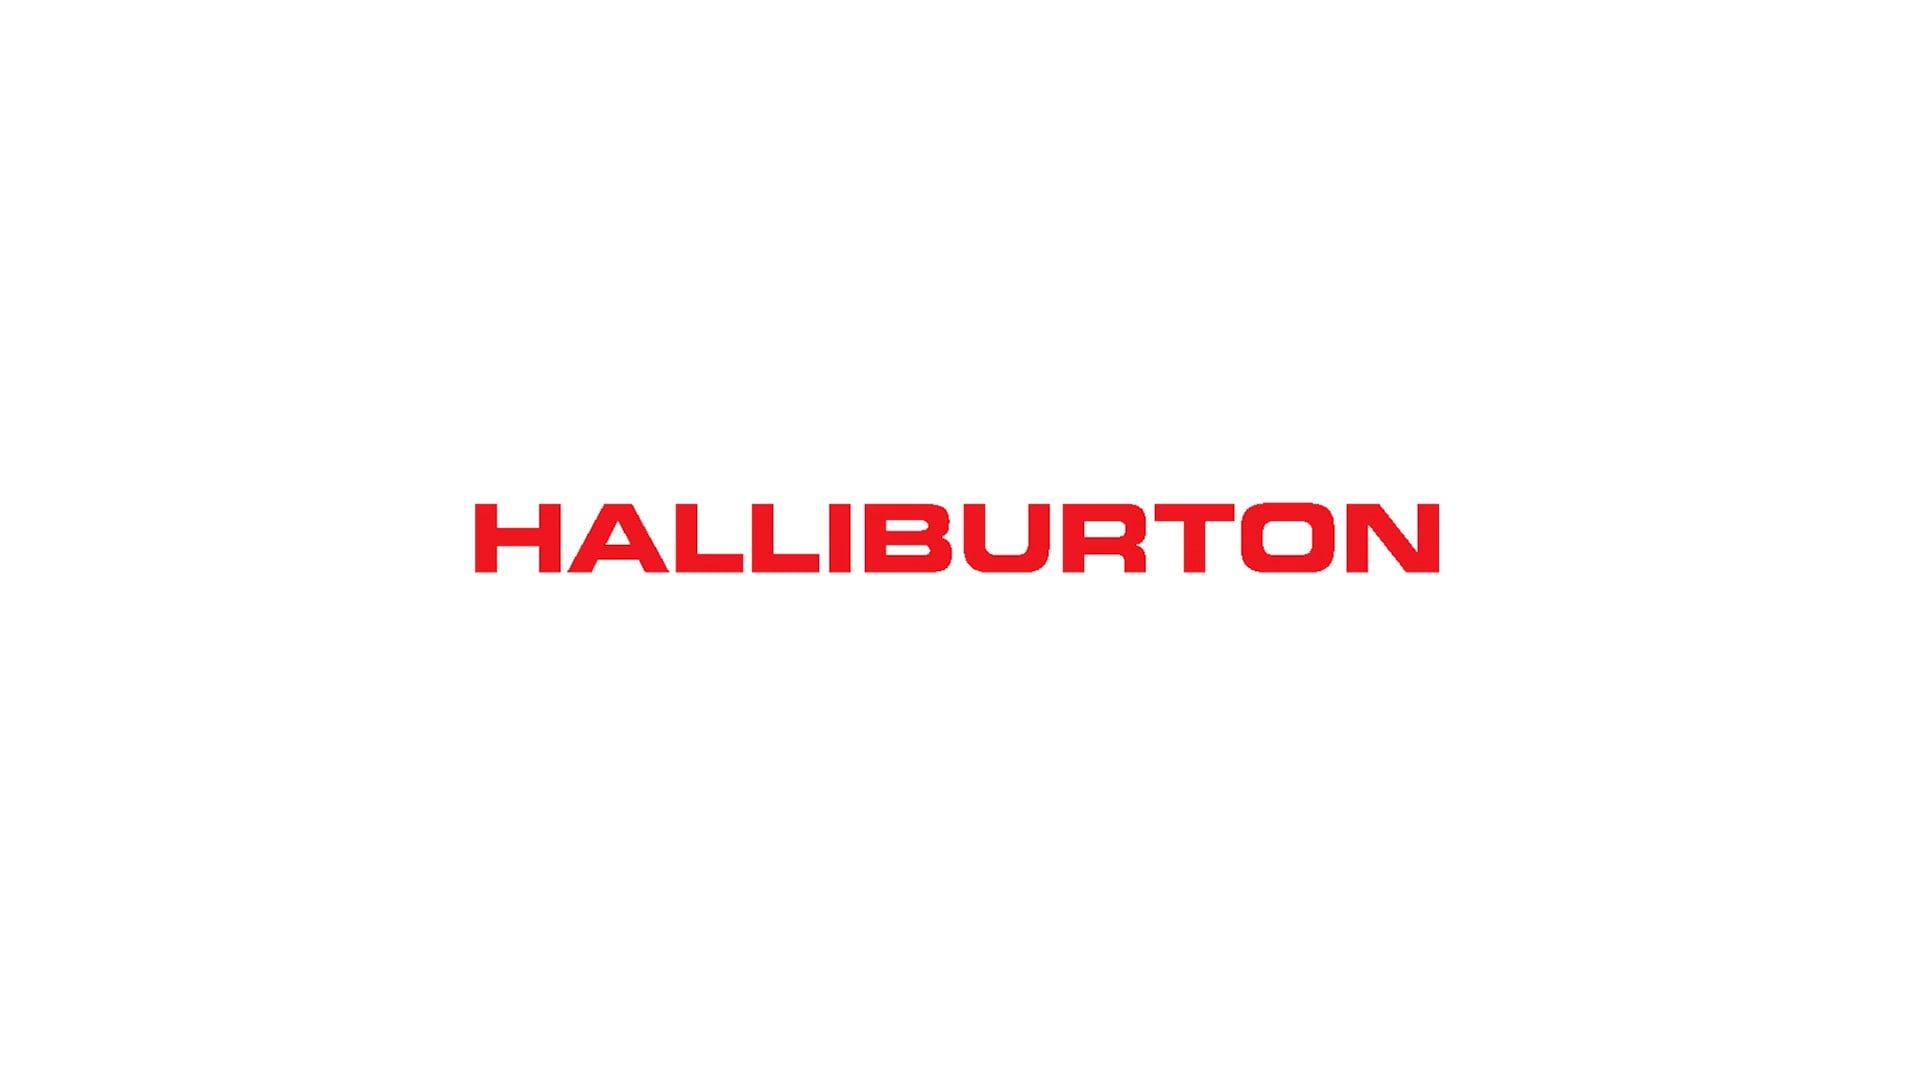 Halliburton - Kids' Meals Century Club Honoree